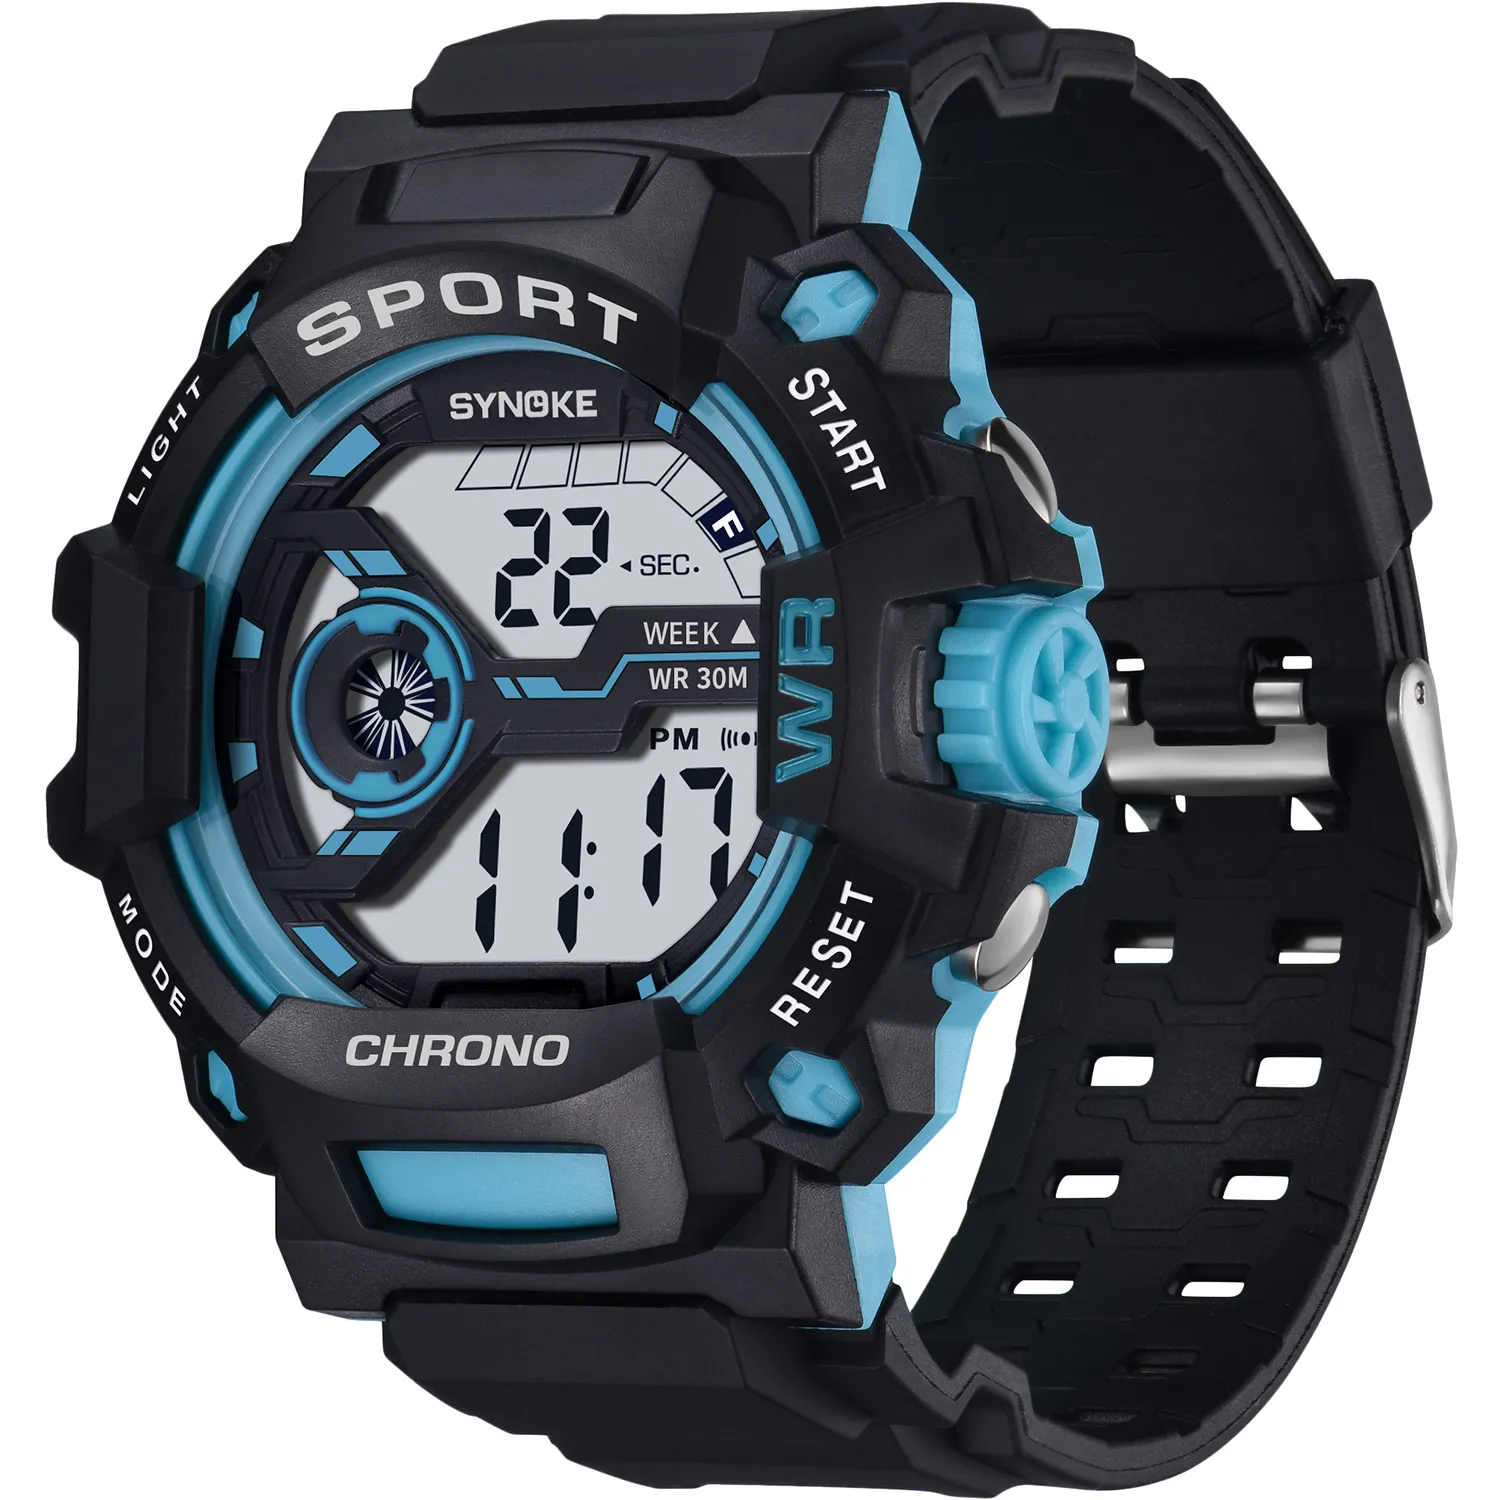 PANARS Mode Männer Digitaluhr Wasserdichte Outdoor Sport männer Sport Armbanduhren LED Elektronische Uhr für Men302R